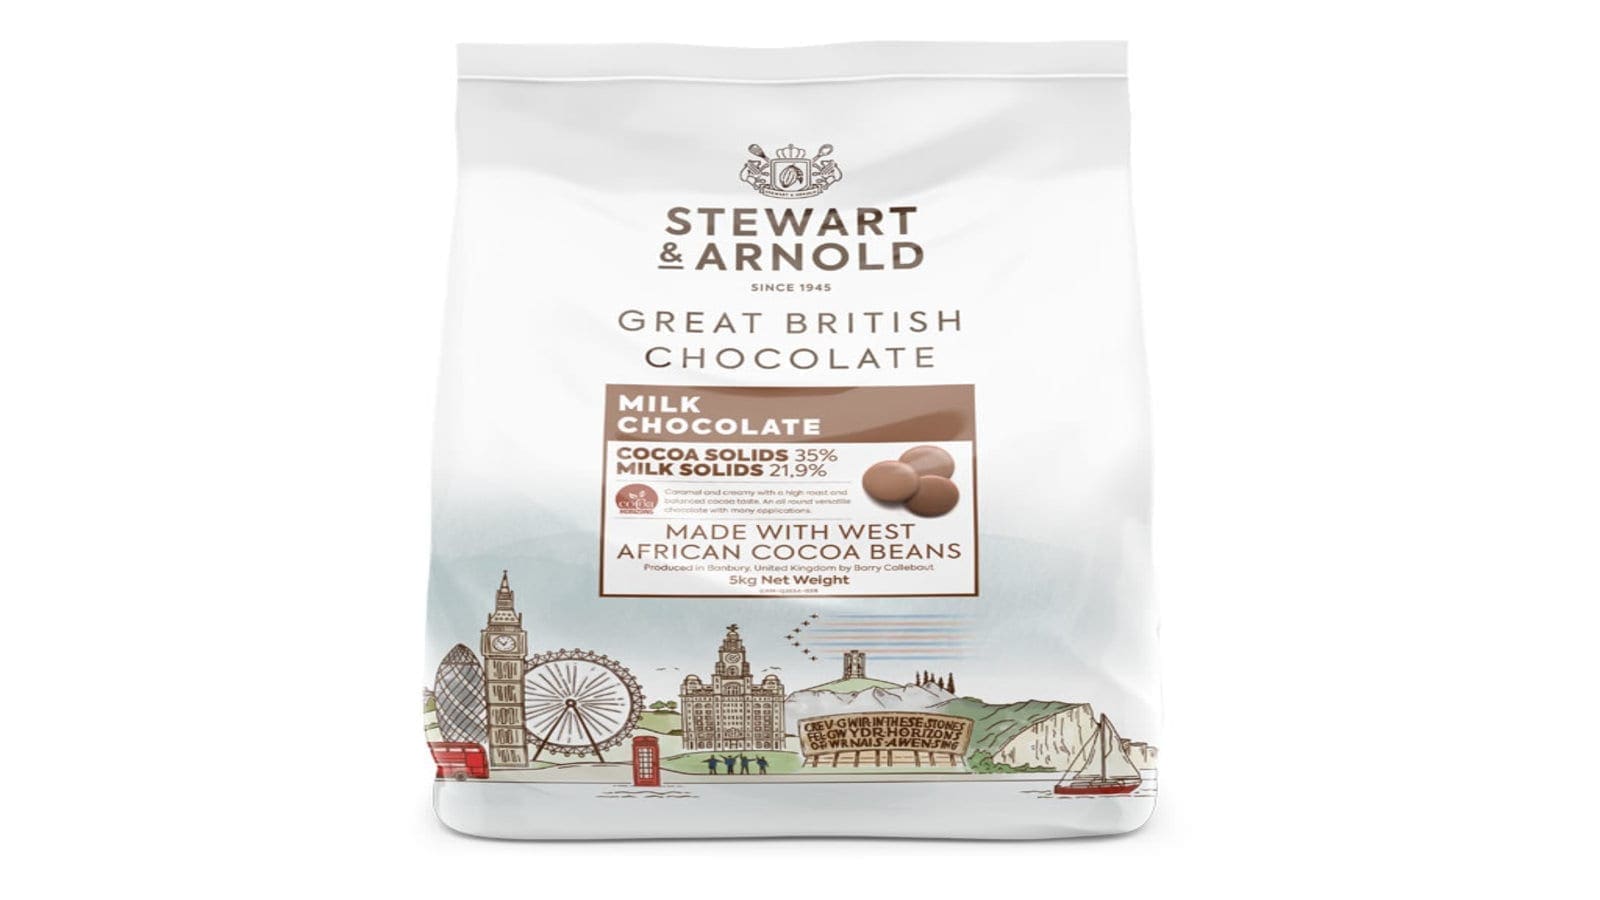 Barry Callebaut releases new Stewart & Arnold chocolate brand targeting British market